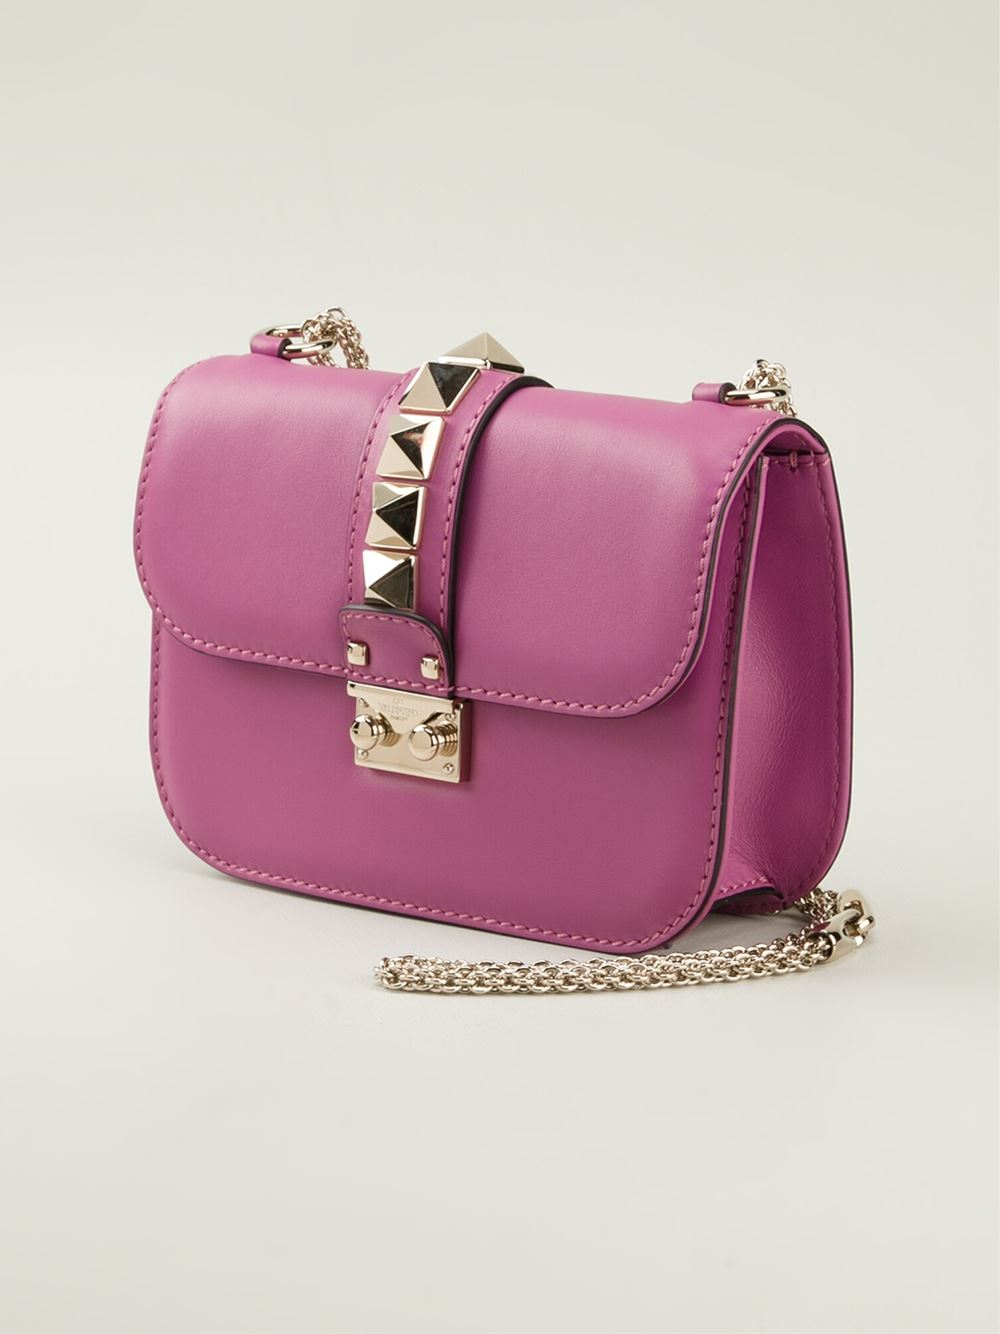 Lyst - Valentino 'Glam Lock' Shoulder Bag in Purple